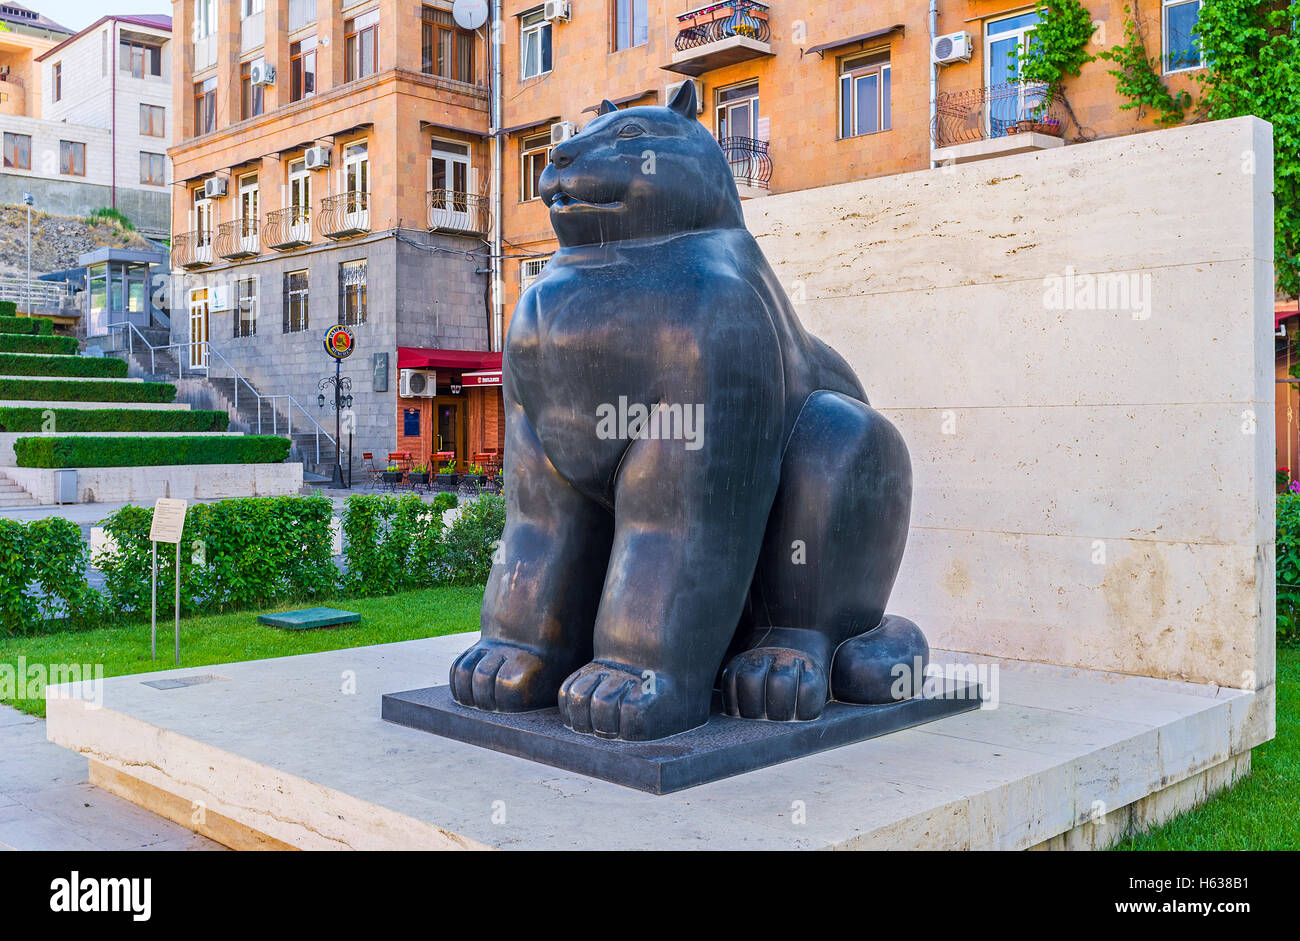 The Botero's giant cat in Cafesjian sculpture garden in the city center, Yerevan. Stock Photo